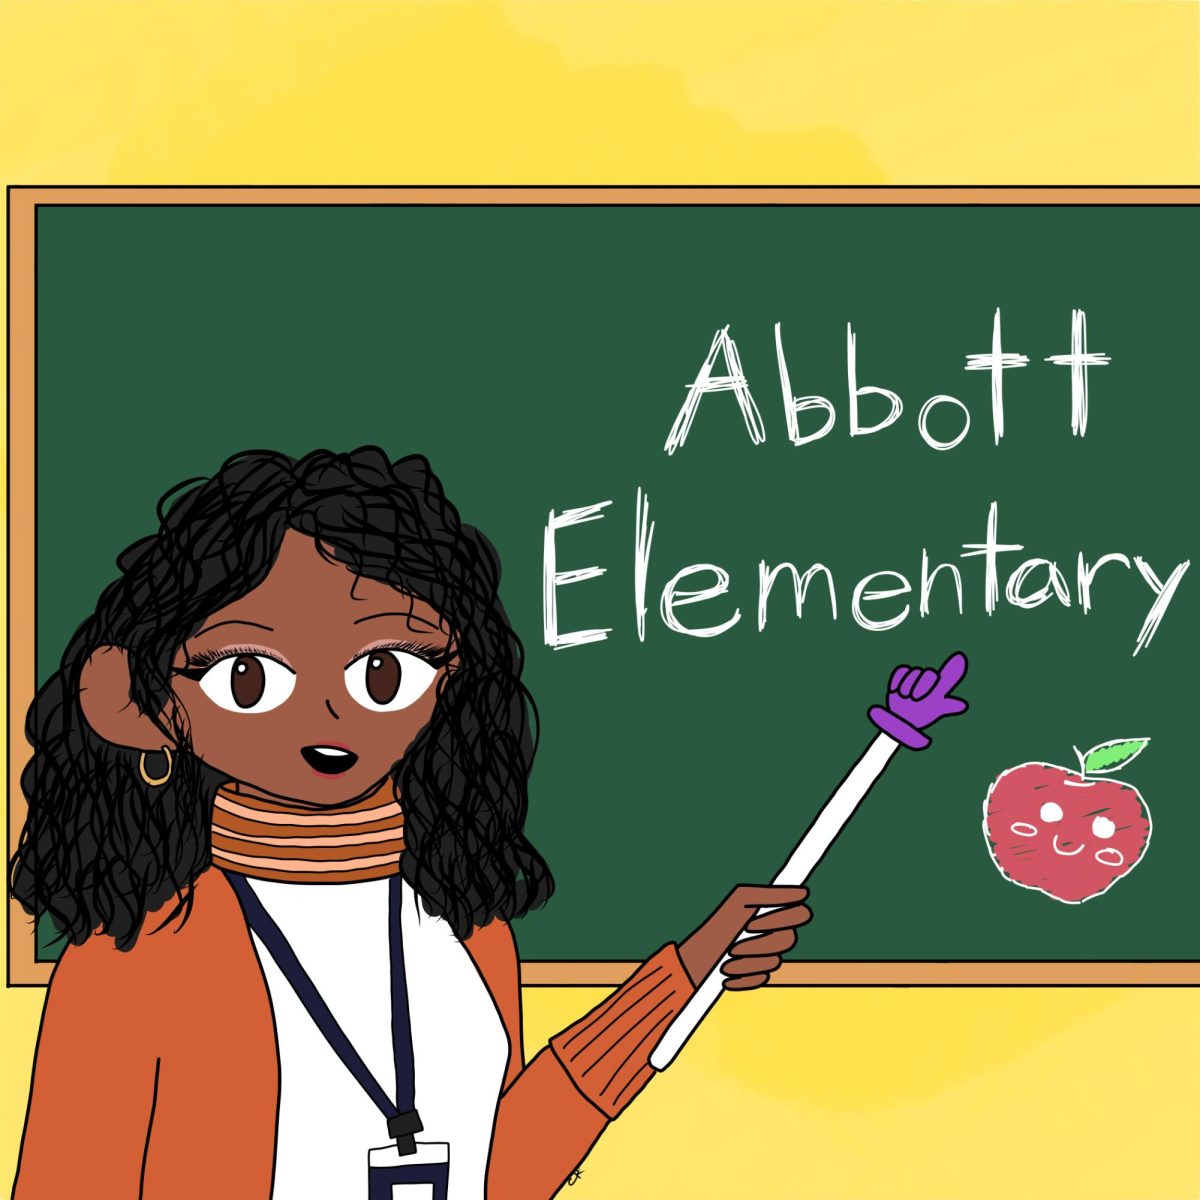 OPINION: The impact of Abbott Elementary